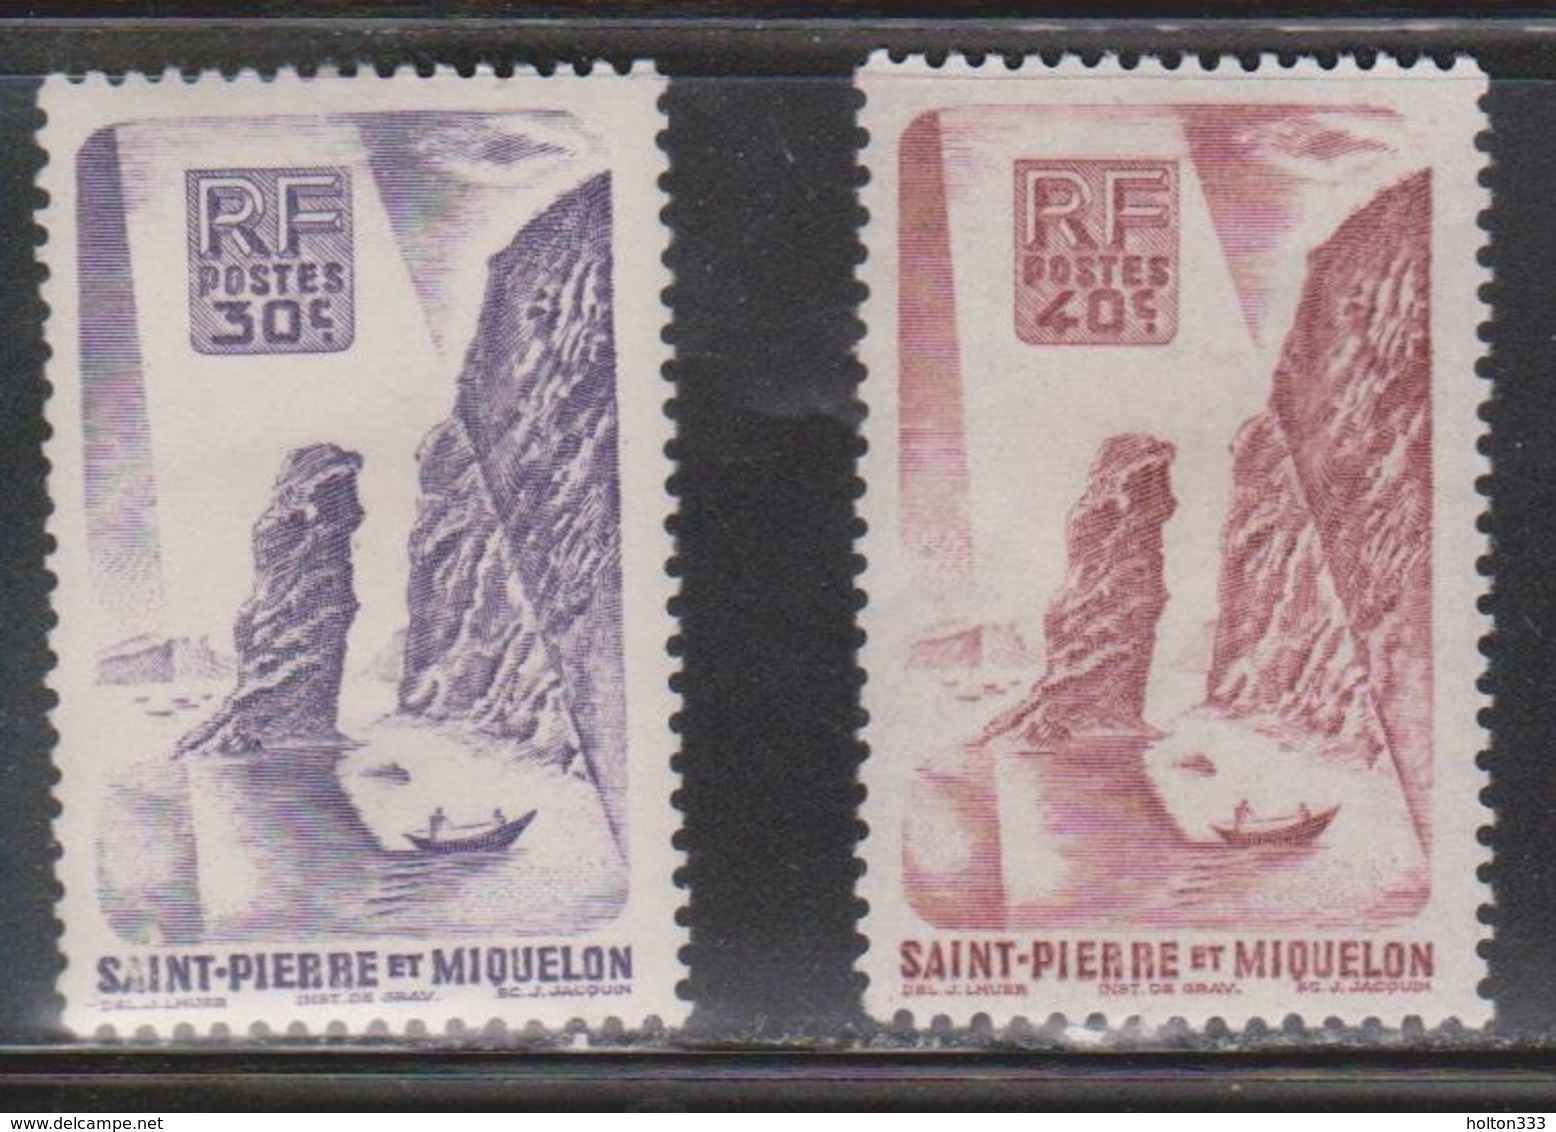 ST PIERRE & MIQUELON Scott # 325-6 MH - Unused Stamps